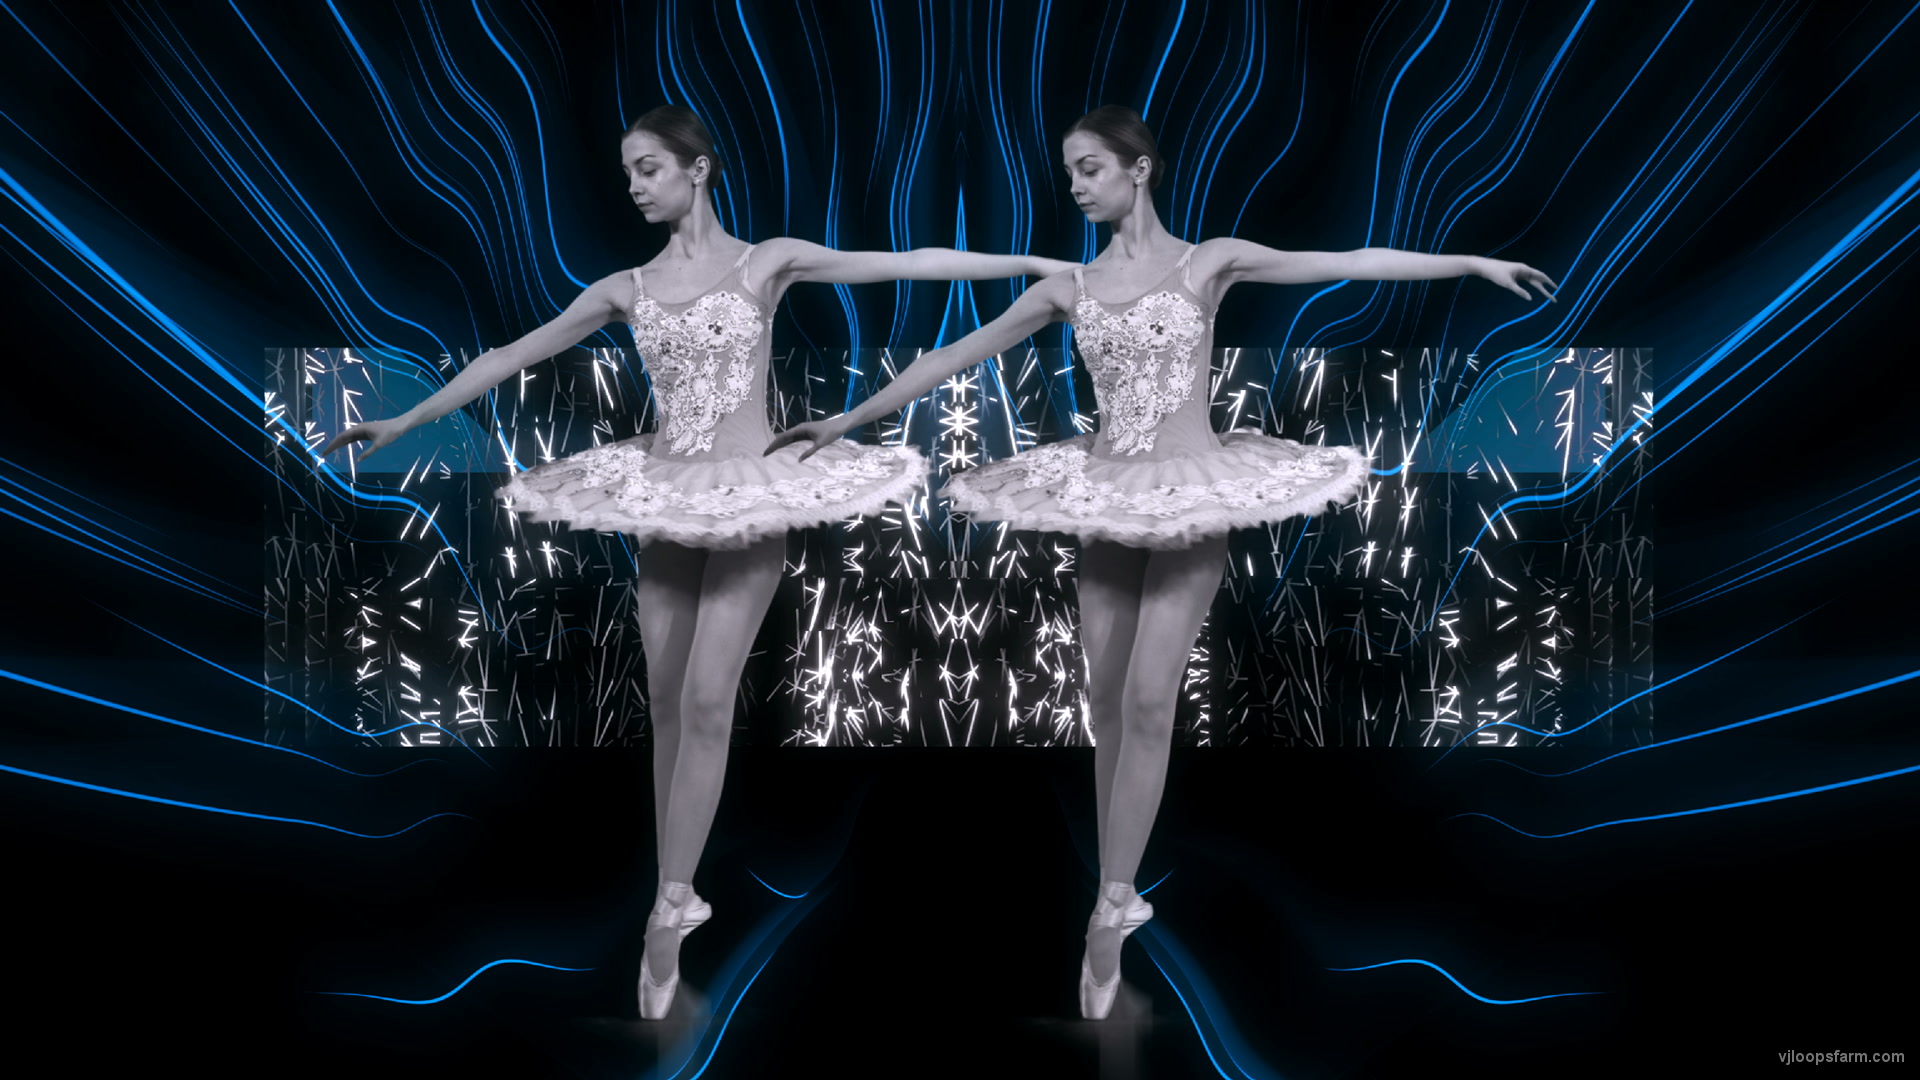 Ballet Swan Girl Motion Background Ultra HD Video Art VJ Loop